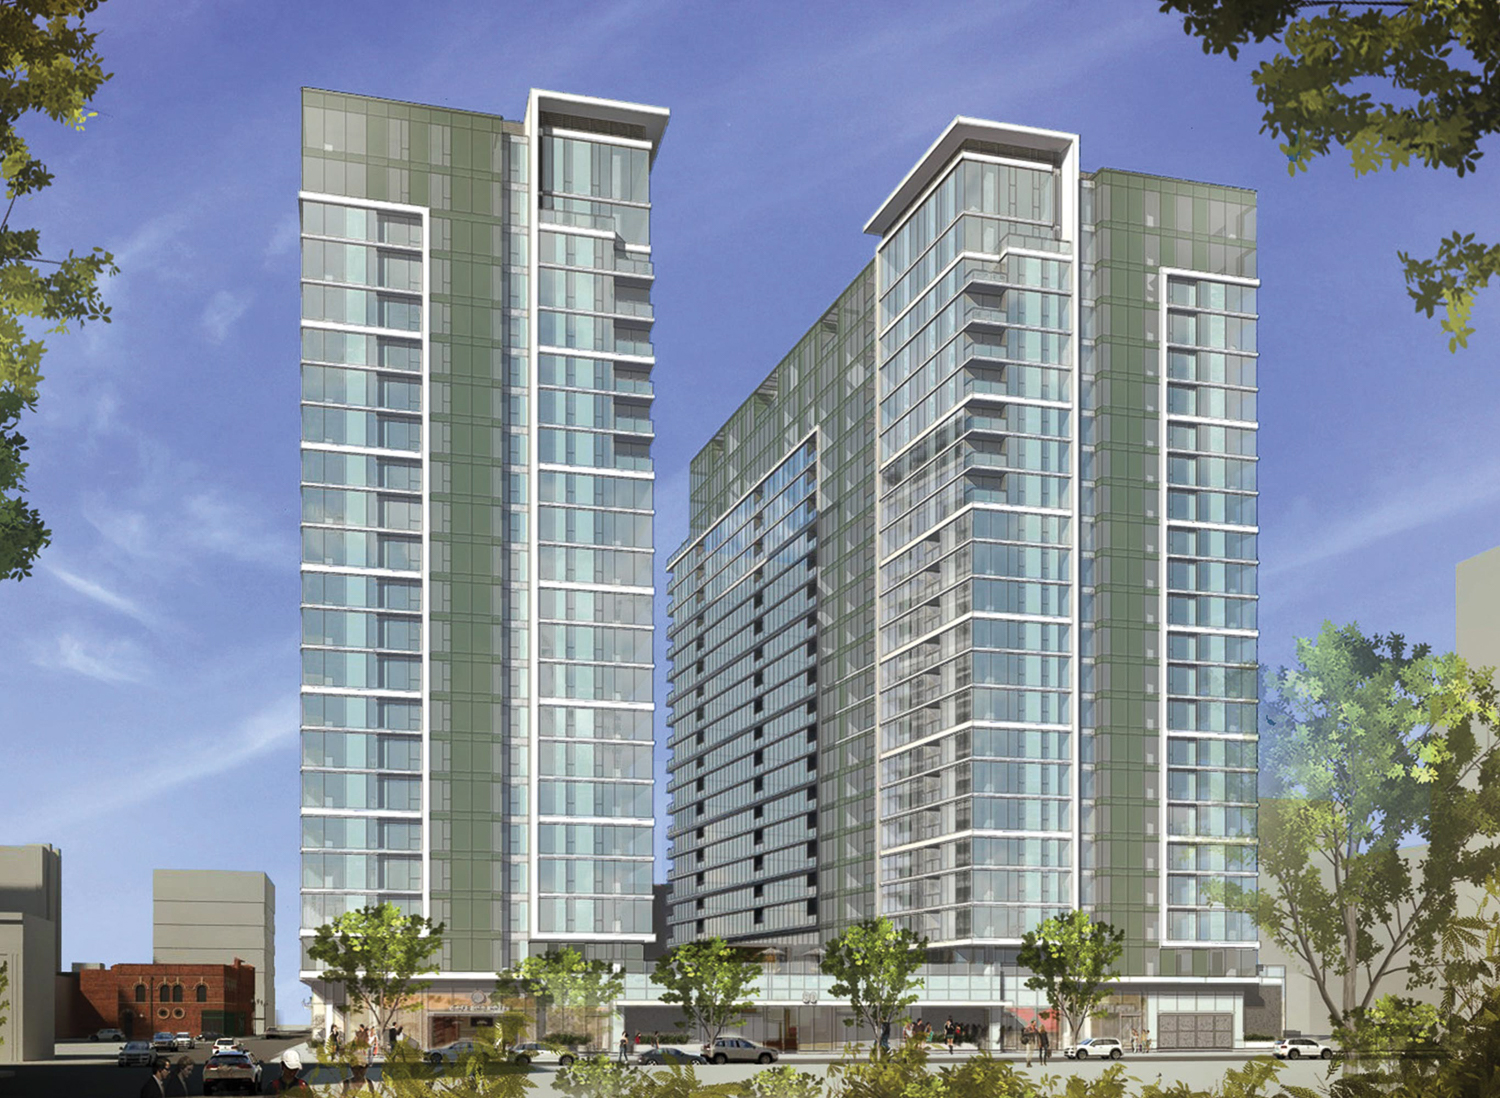 60-70 South Almaden Avenue site view, rendering via Z&L Properties